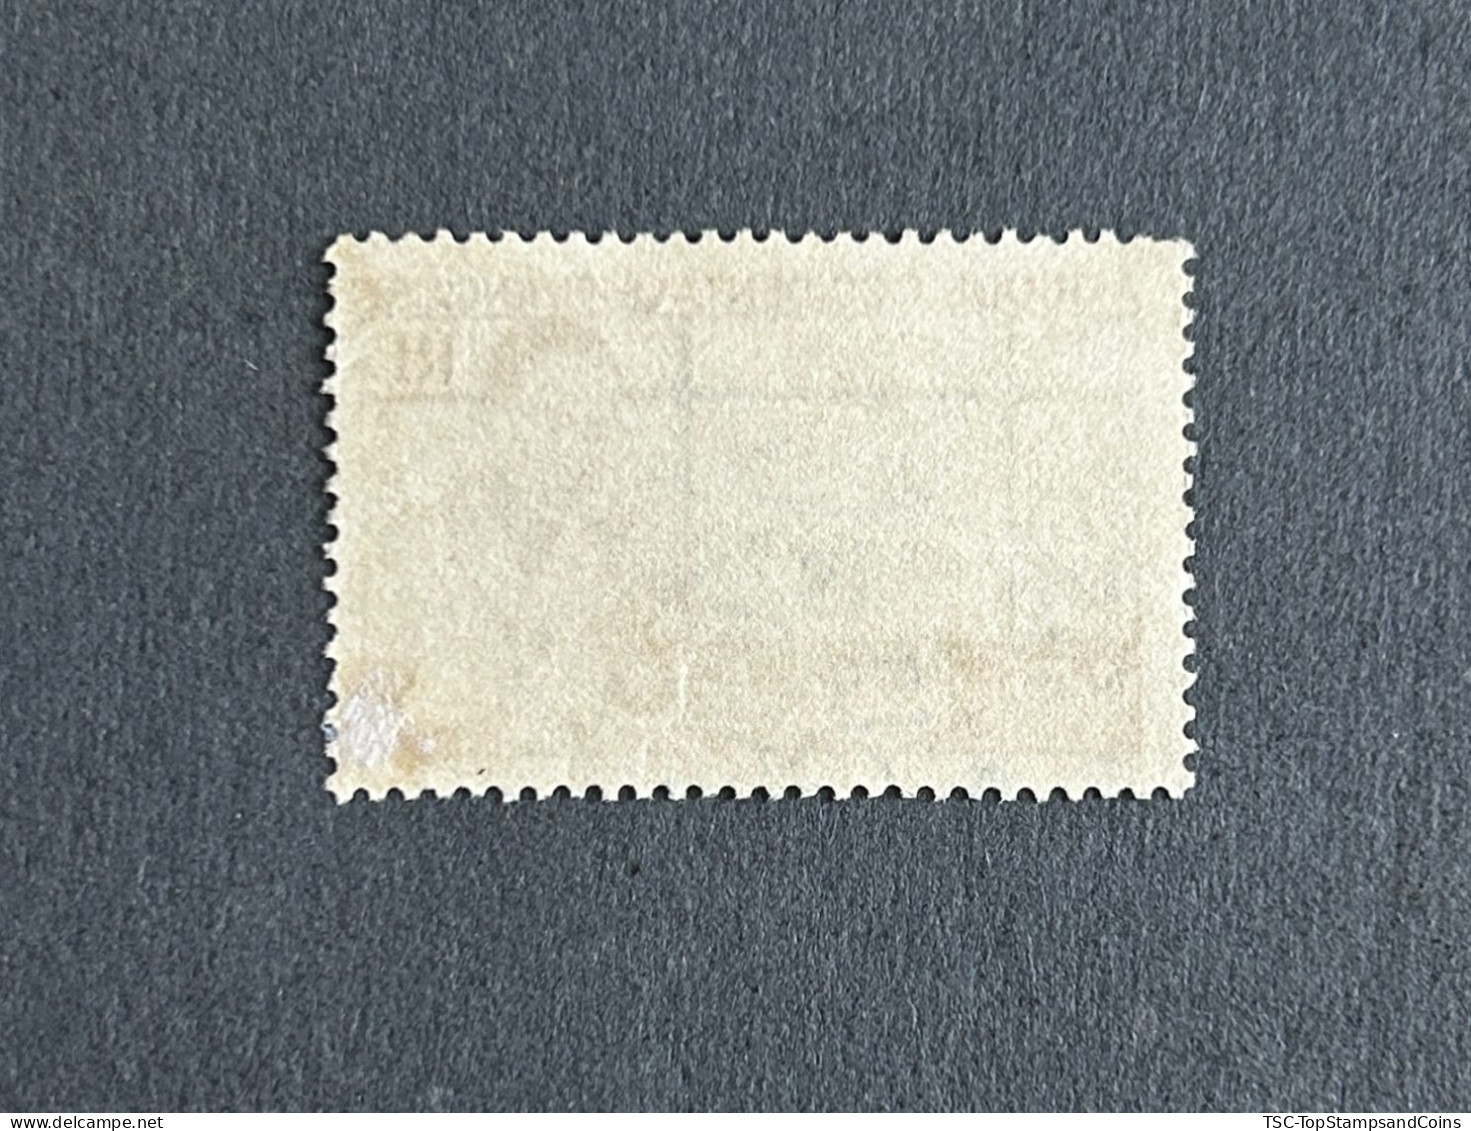 FRAWA0048U3 - Local People - Medical Laboratory - 15 F Used Stamp - AOF - 1953 - Gebraucht